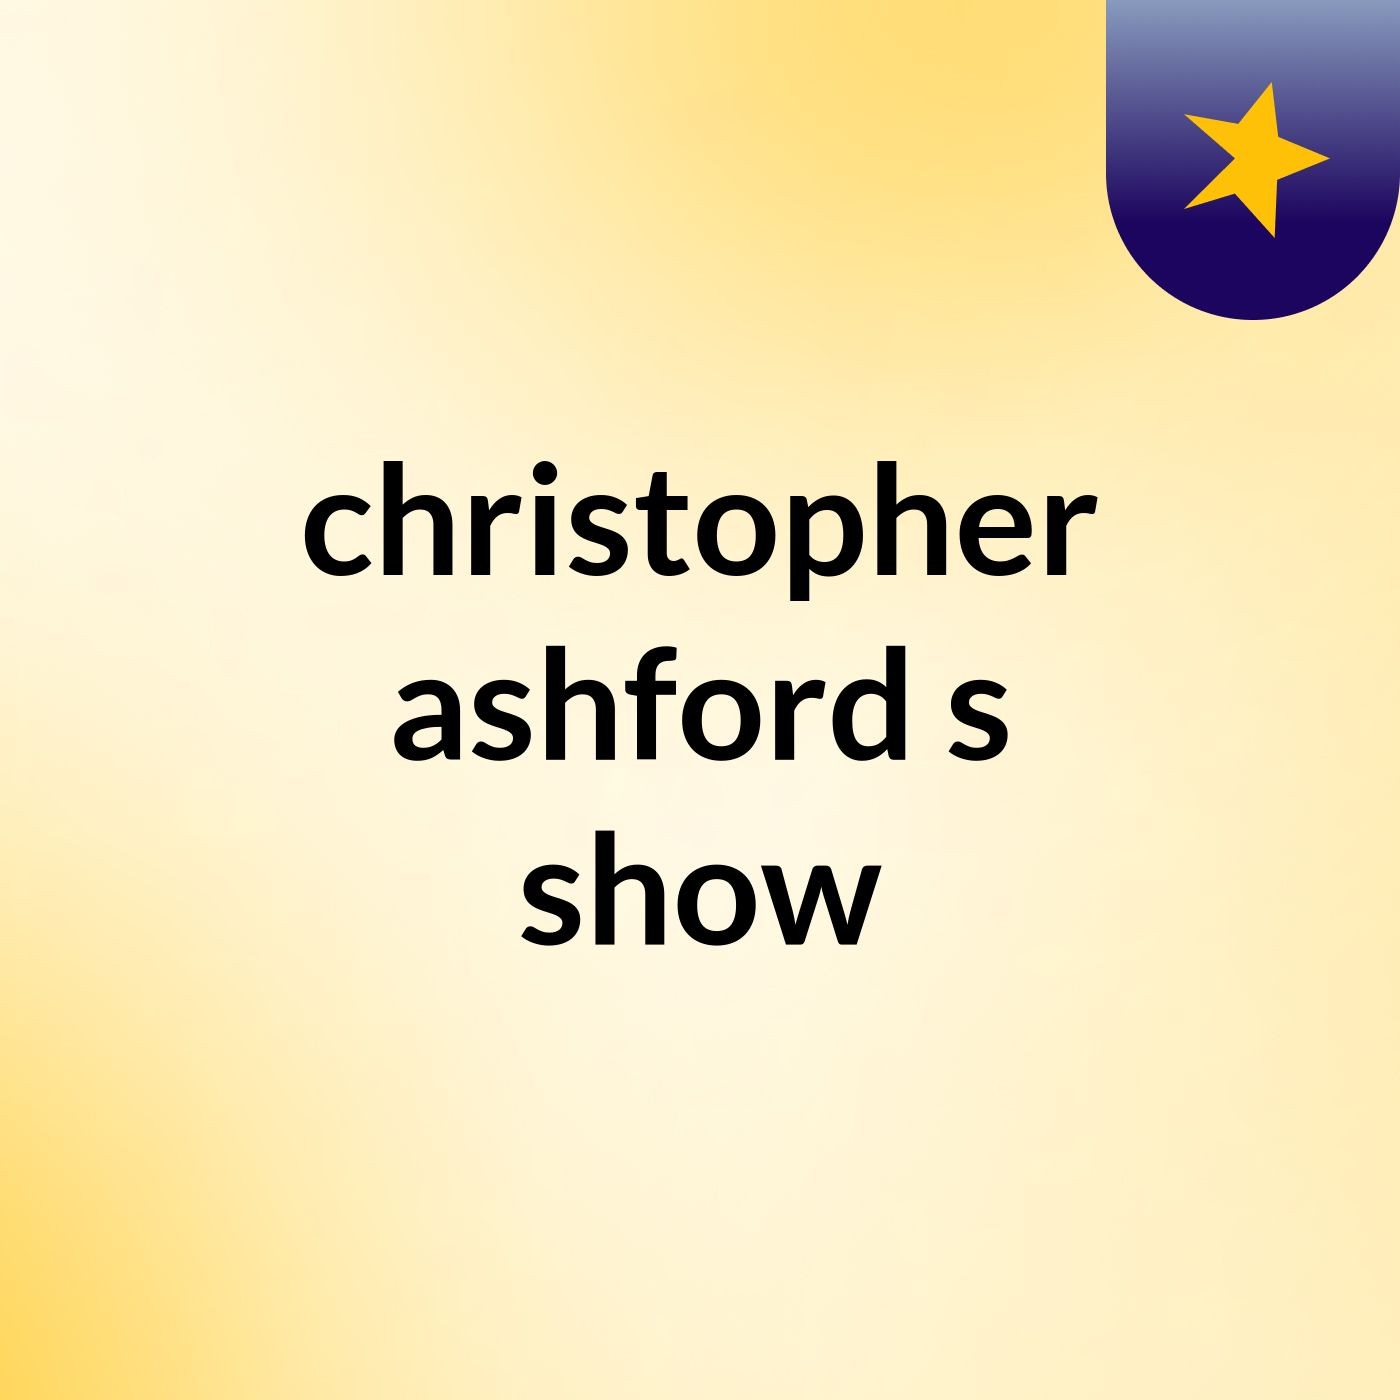 christopher ashford's show